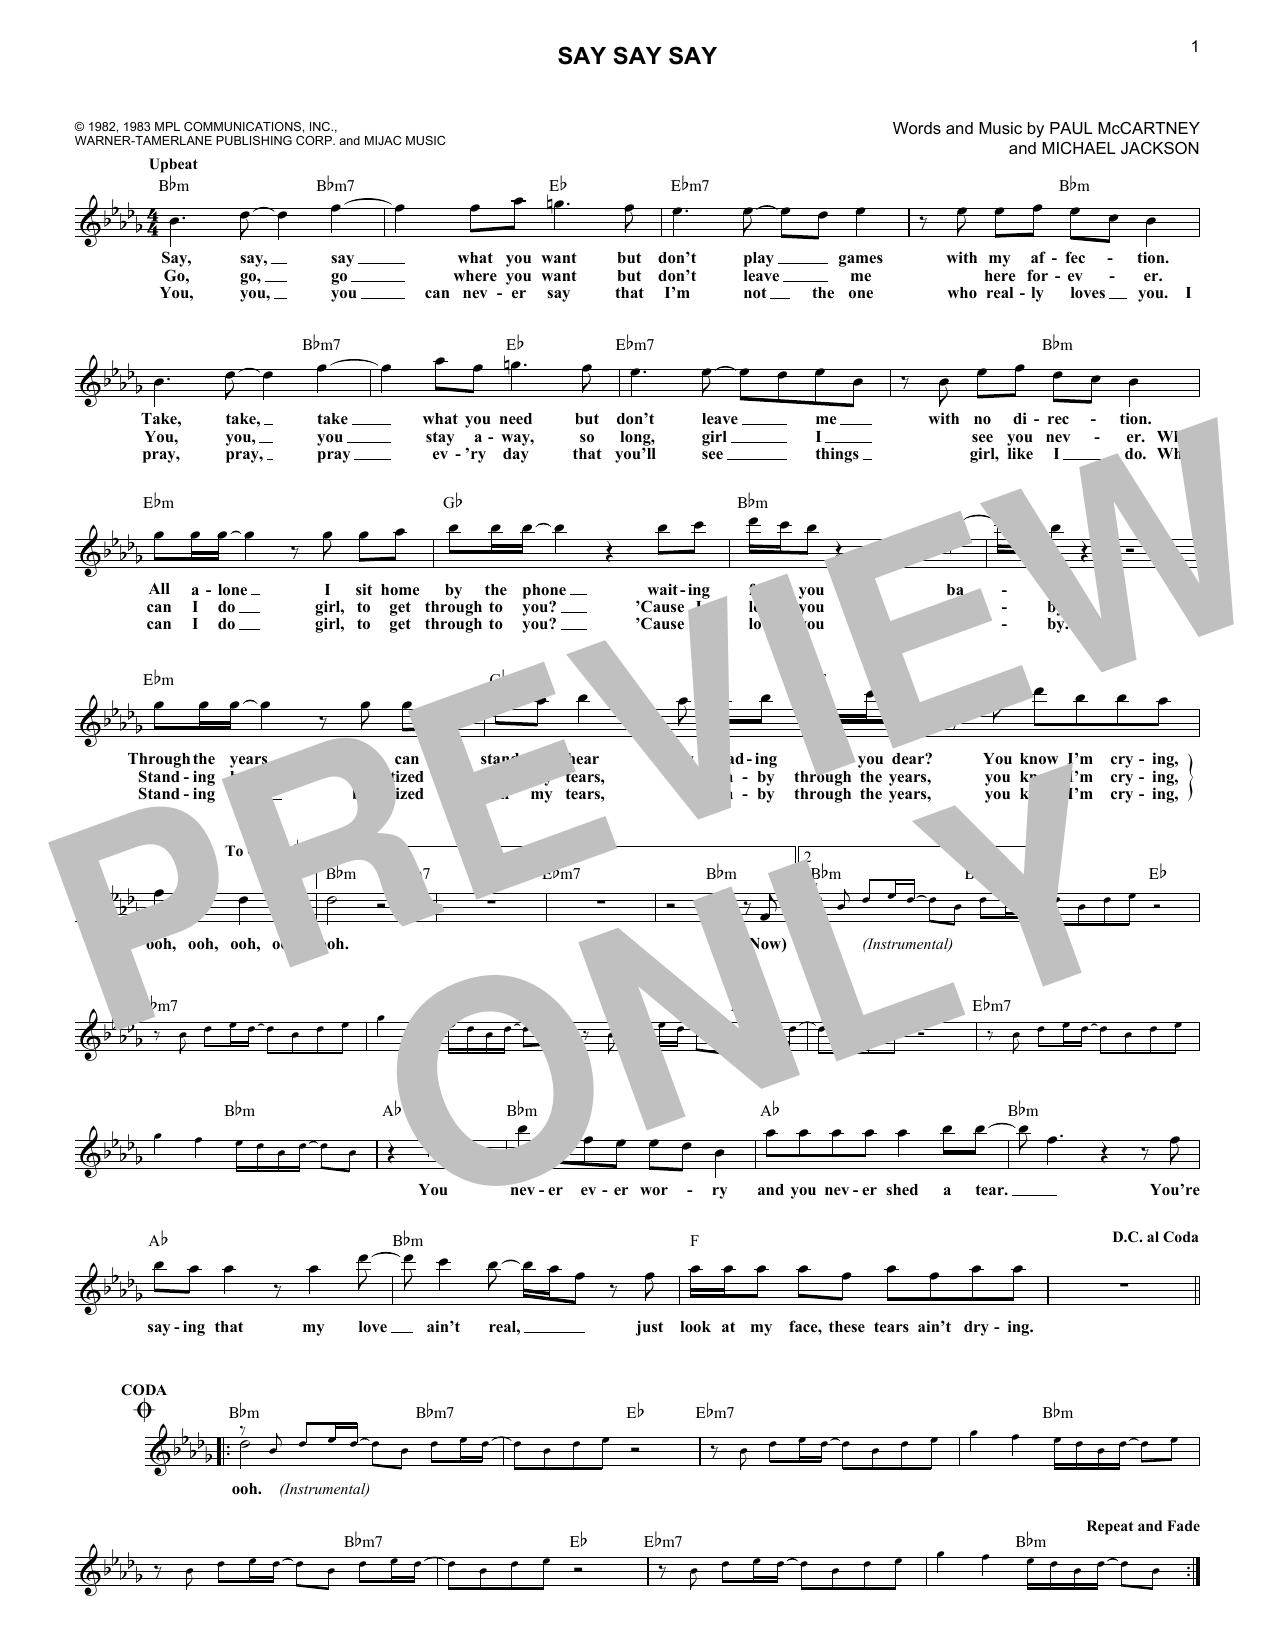 Paul McCartney & Michael Jackson Say Say Say Sheet Music Notes & Chords for Real Book – Melody, Lyrics & Chords - Download or Print PDF